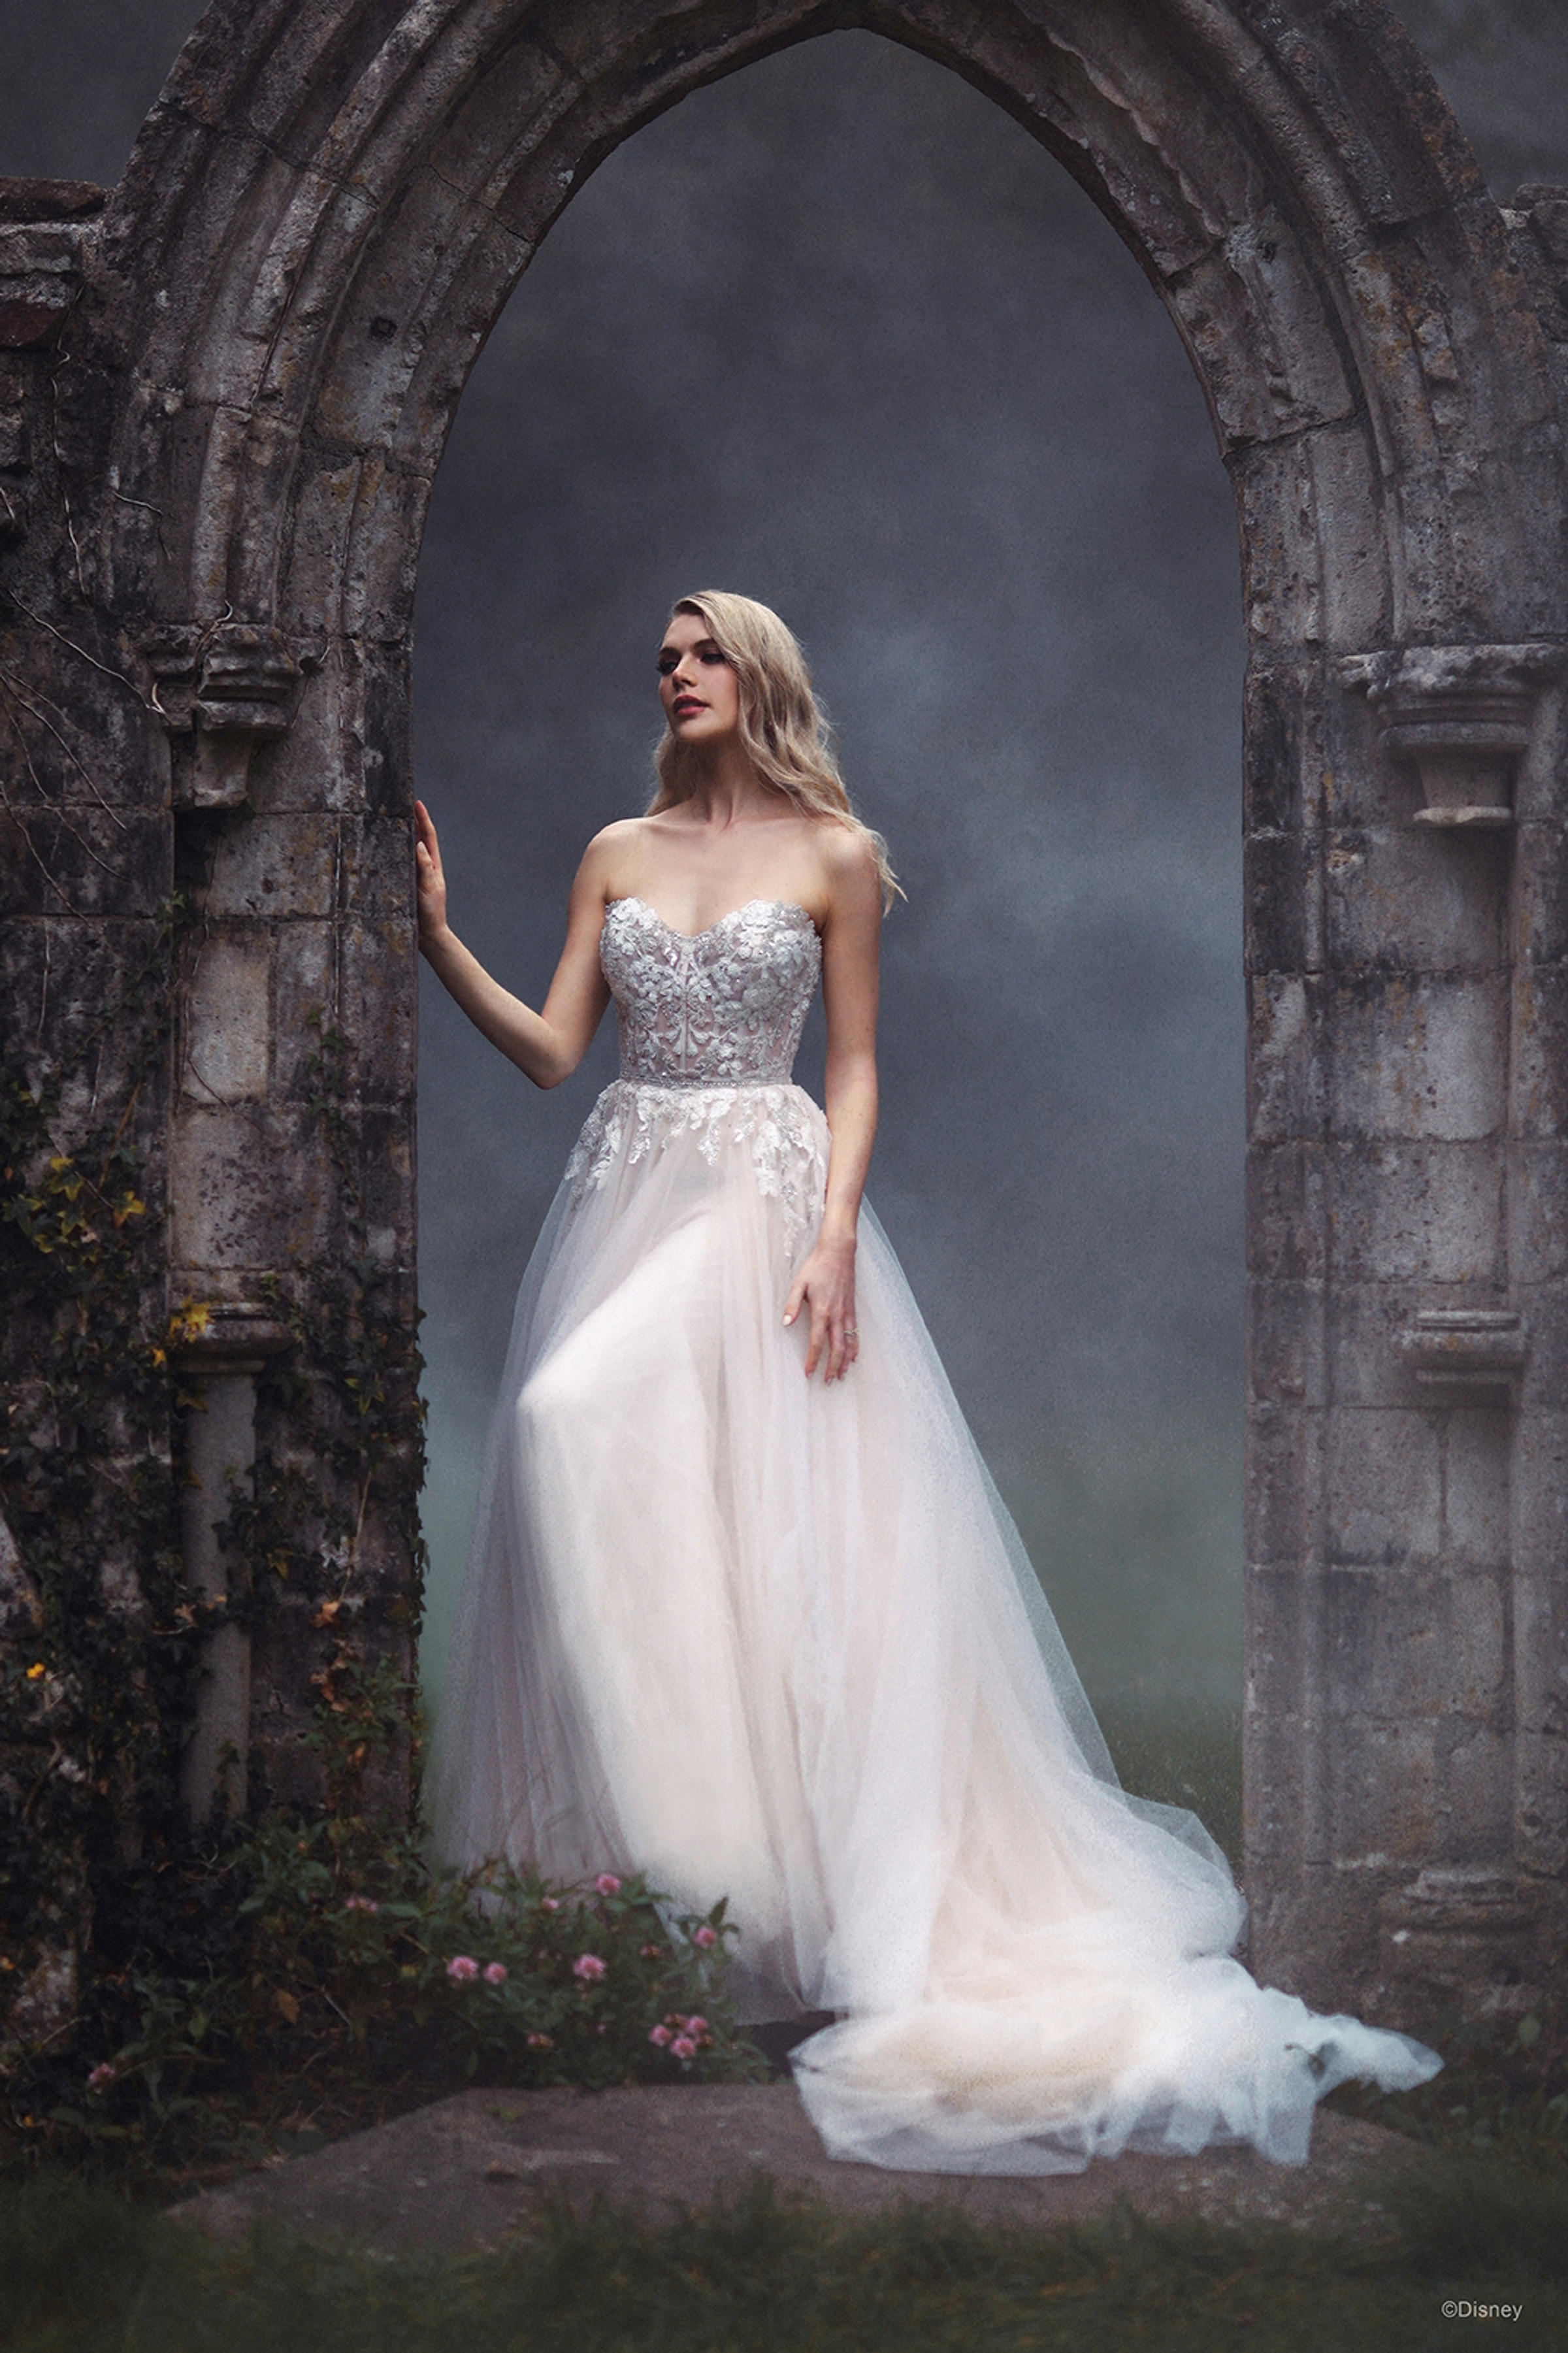 Aurora Bridal Gowns Standard Collection, Boutique